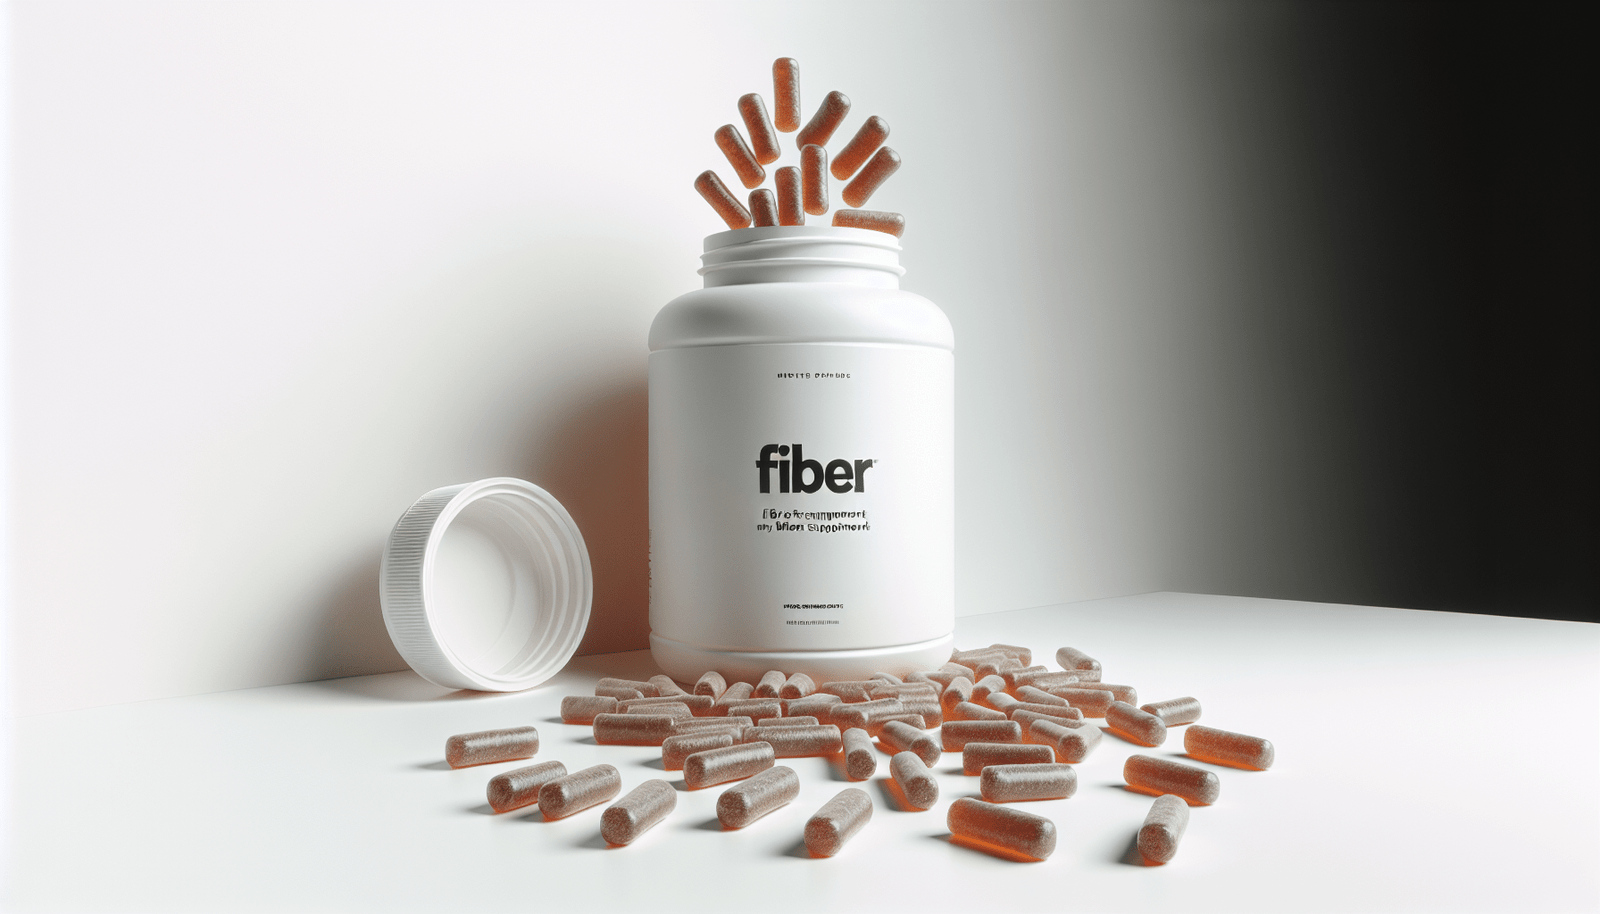 Vita fusion Fiber Well: The Sugar-Free Fiber Supplement Choice